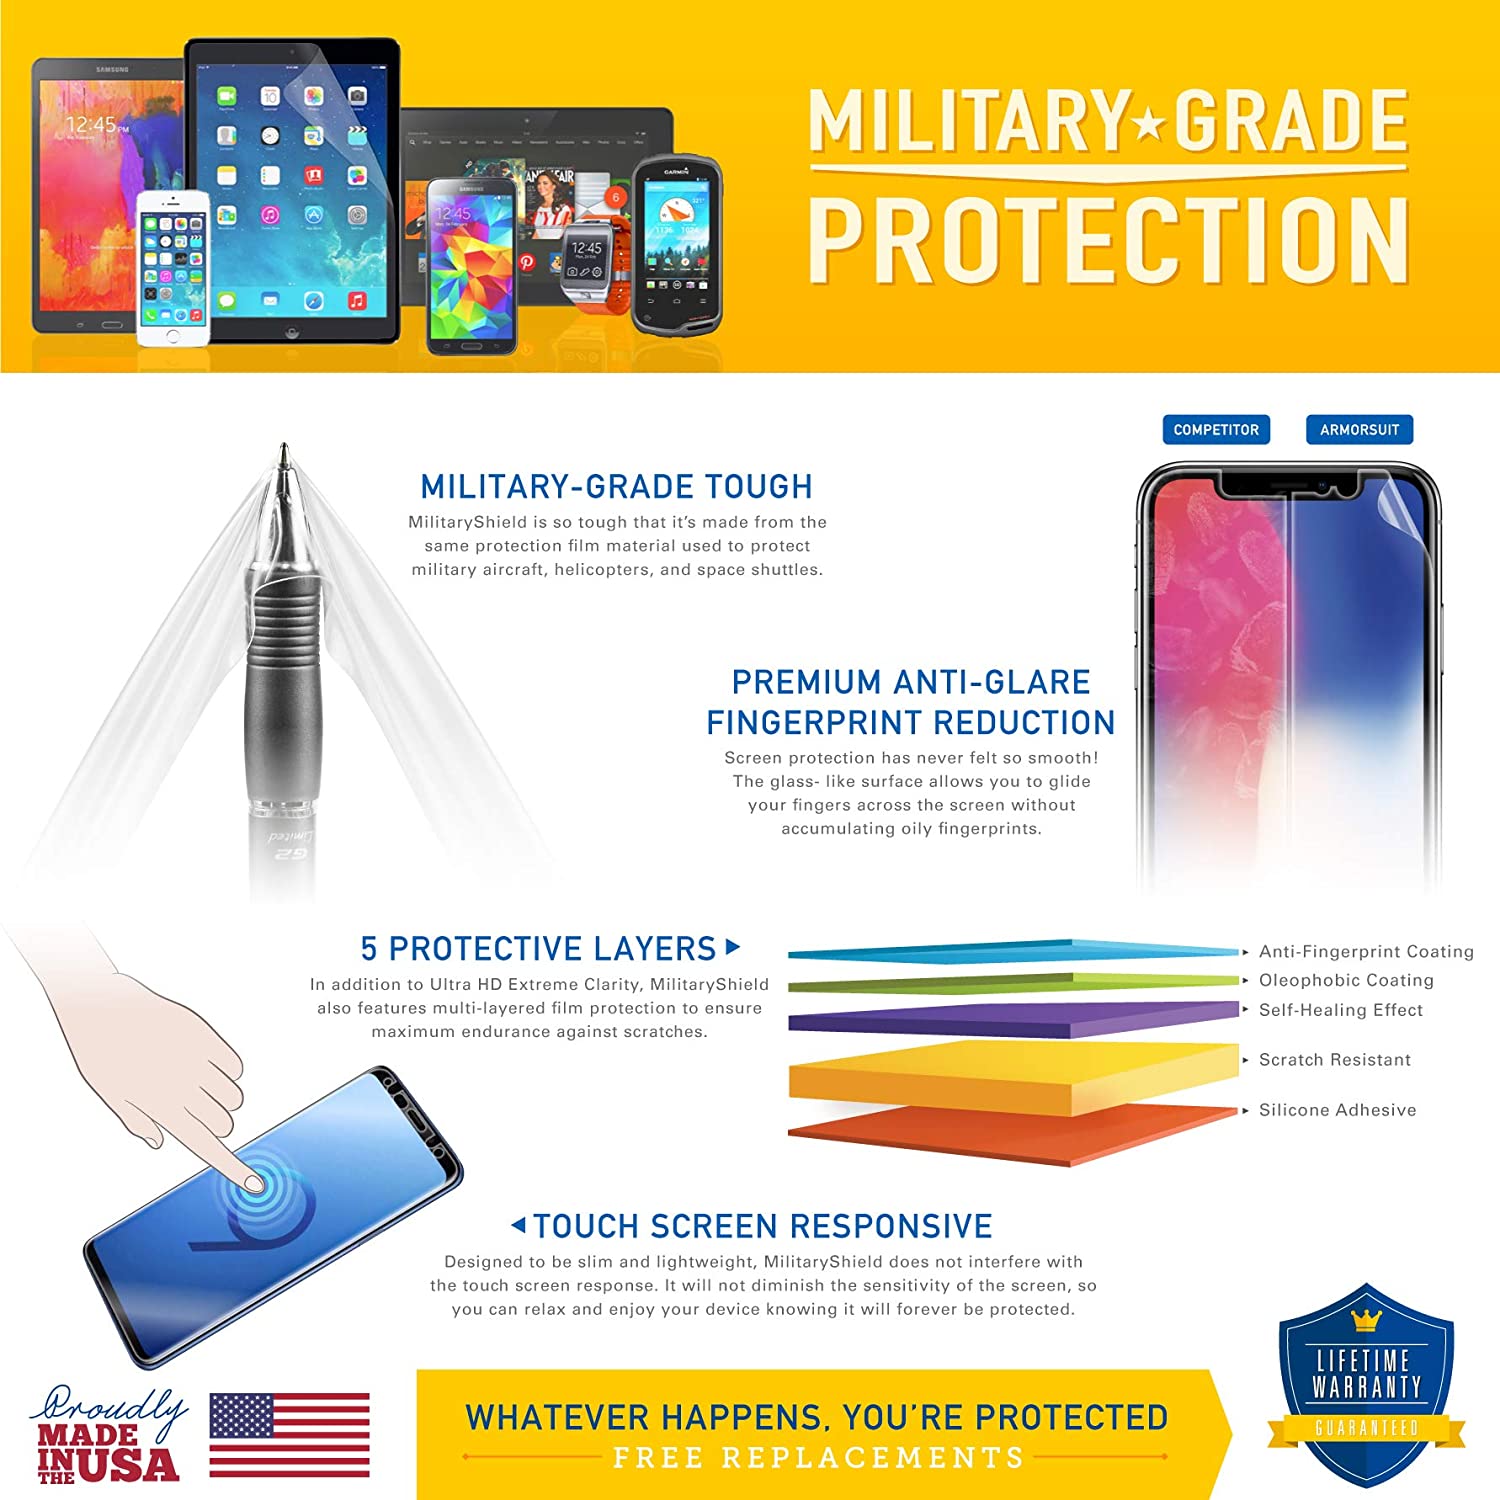 Samsung Galaxy Note 10.1 (2014 Edition) Full Body Skin Protector